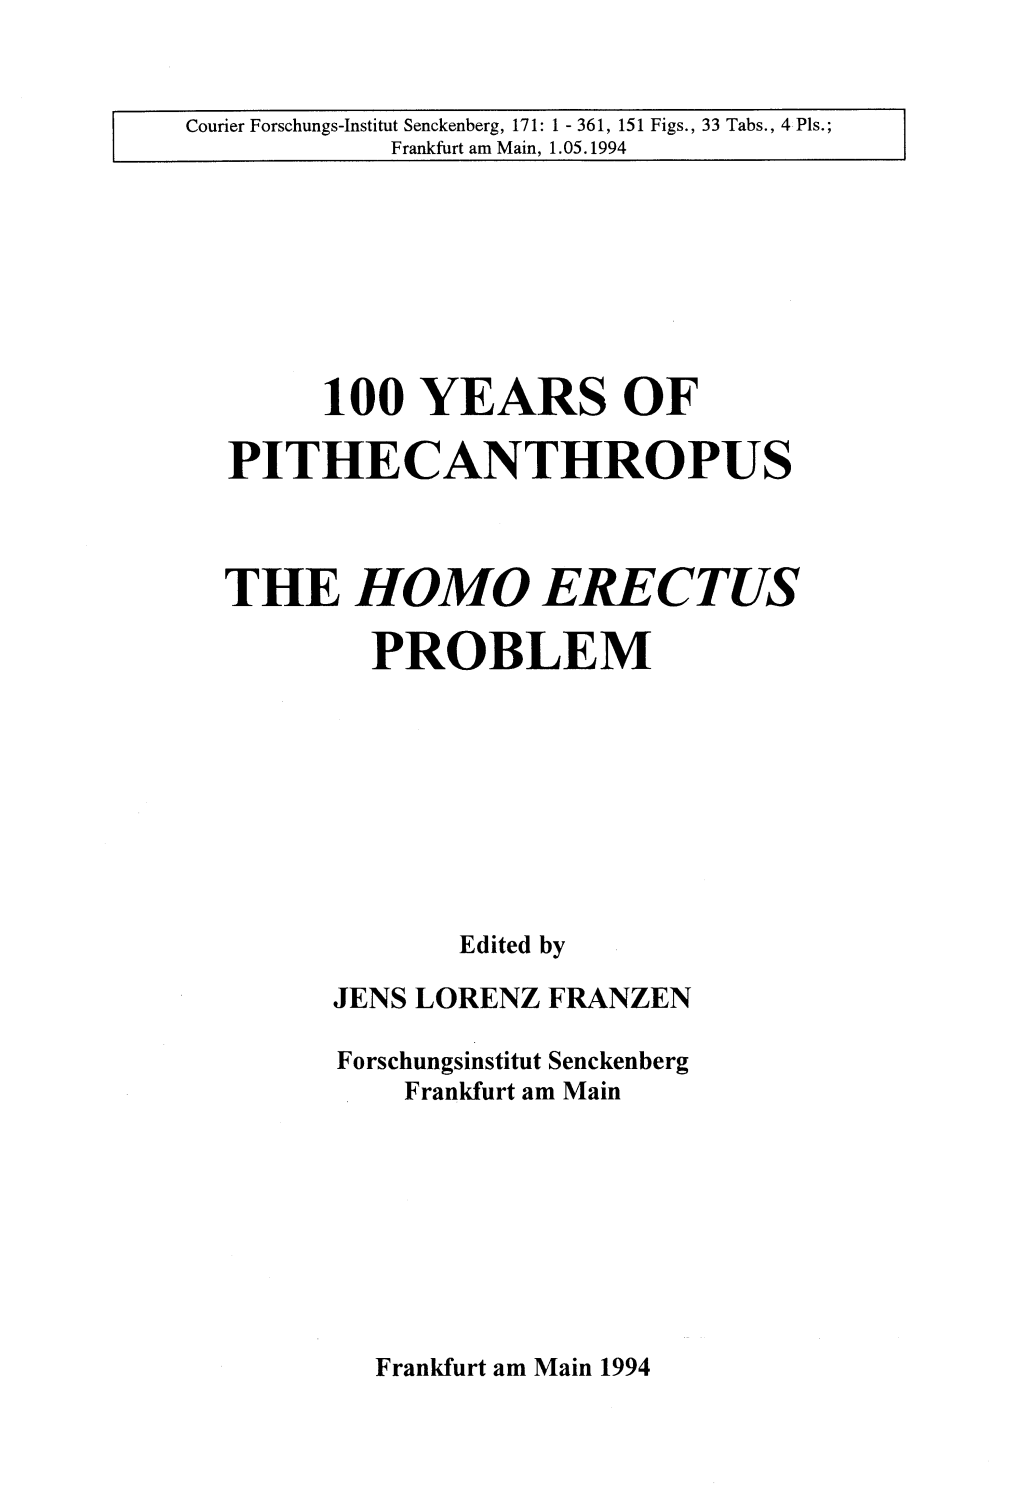 The Homo Erectus Problem